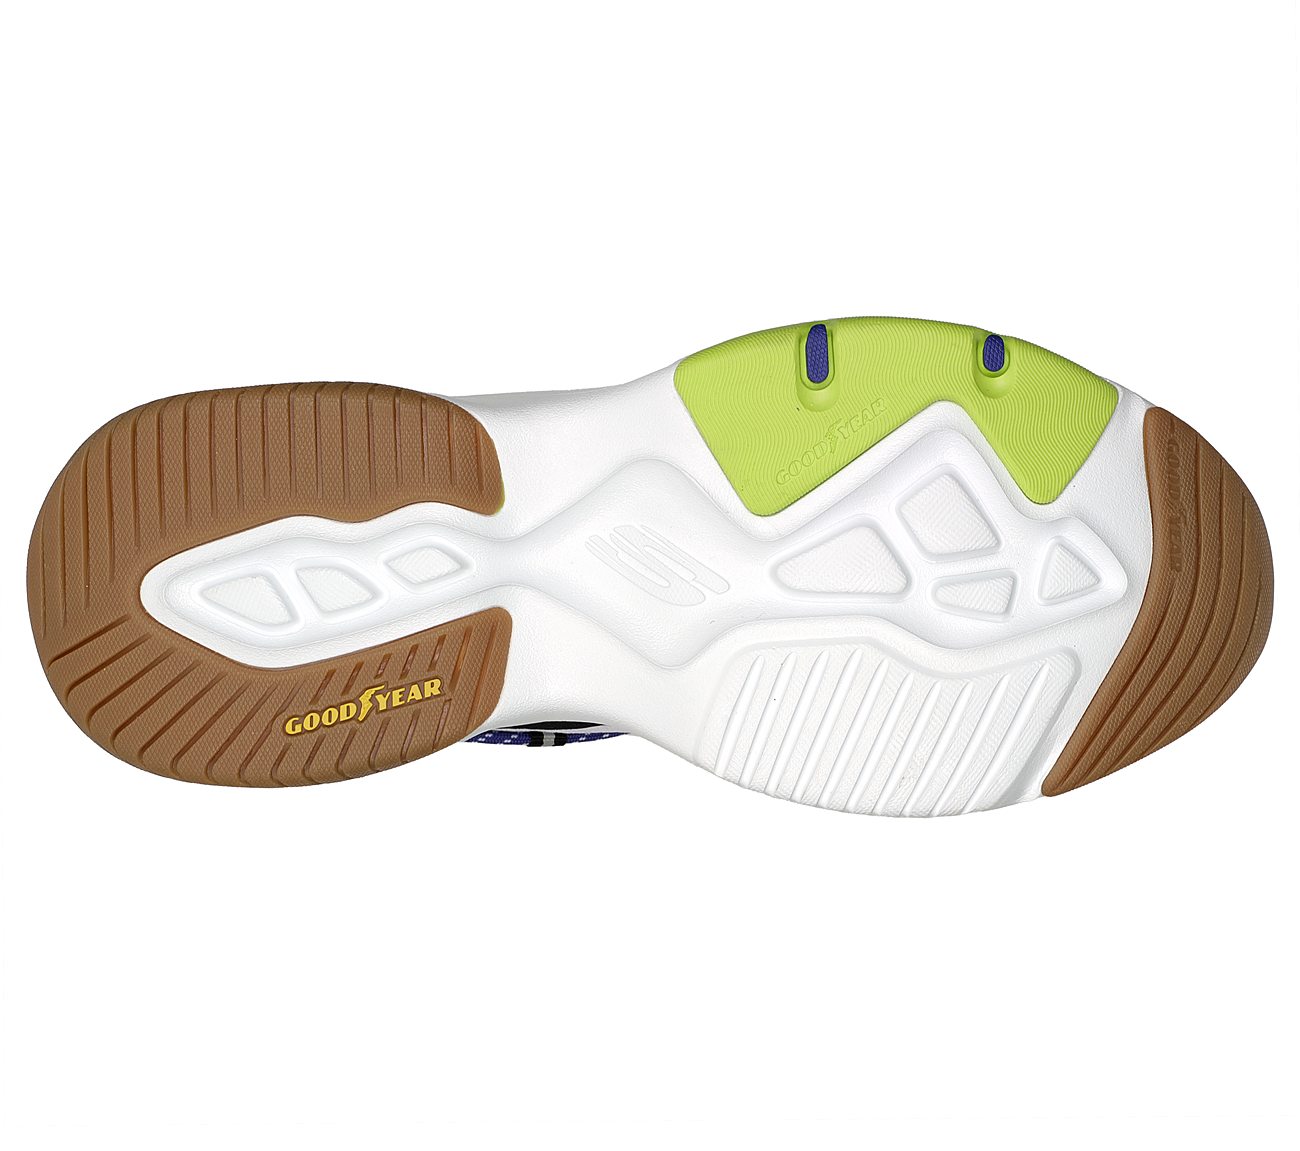 D'LITES 4.0 - DOWNHAUL, WHITE/MULTI Footwear Bottom View